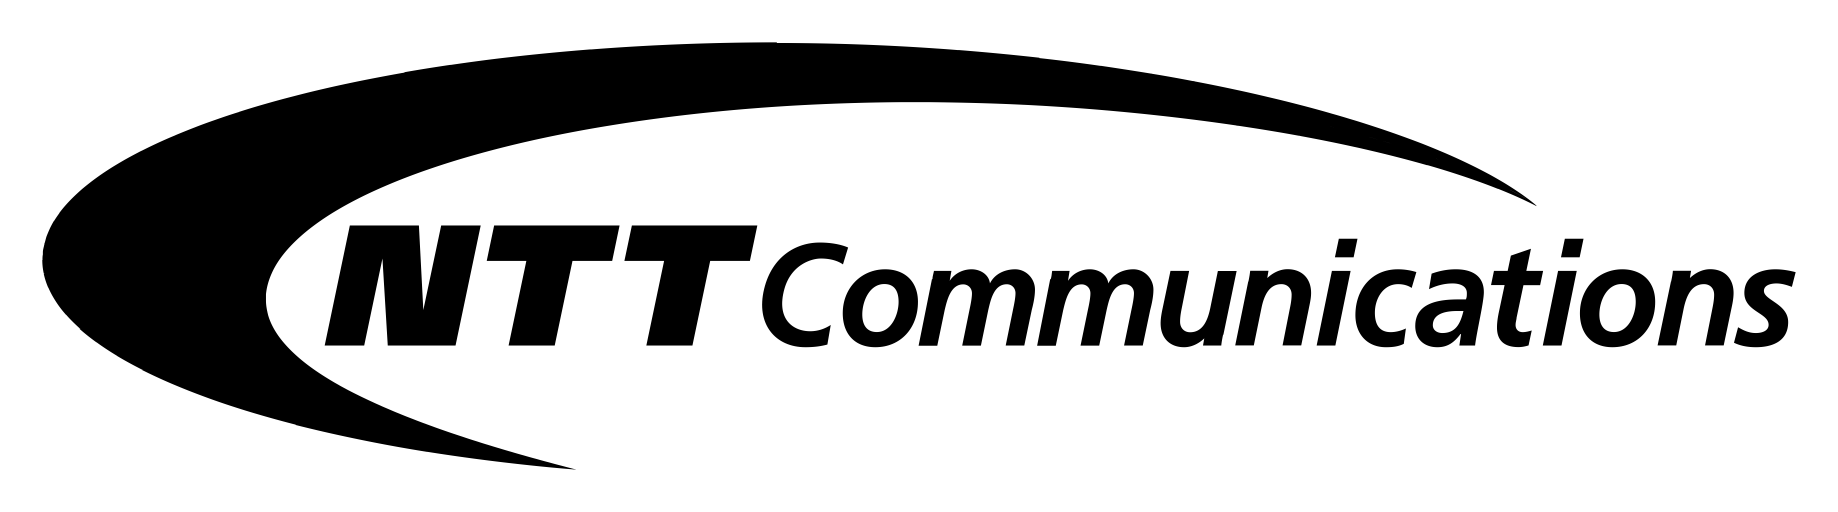 NTT Logo - Ntt Communications Logo transparent PNG